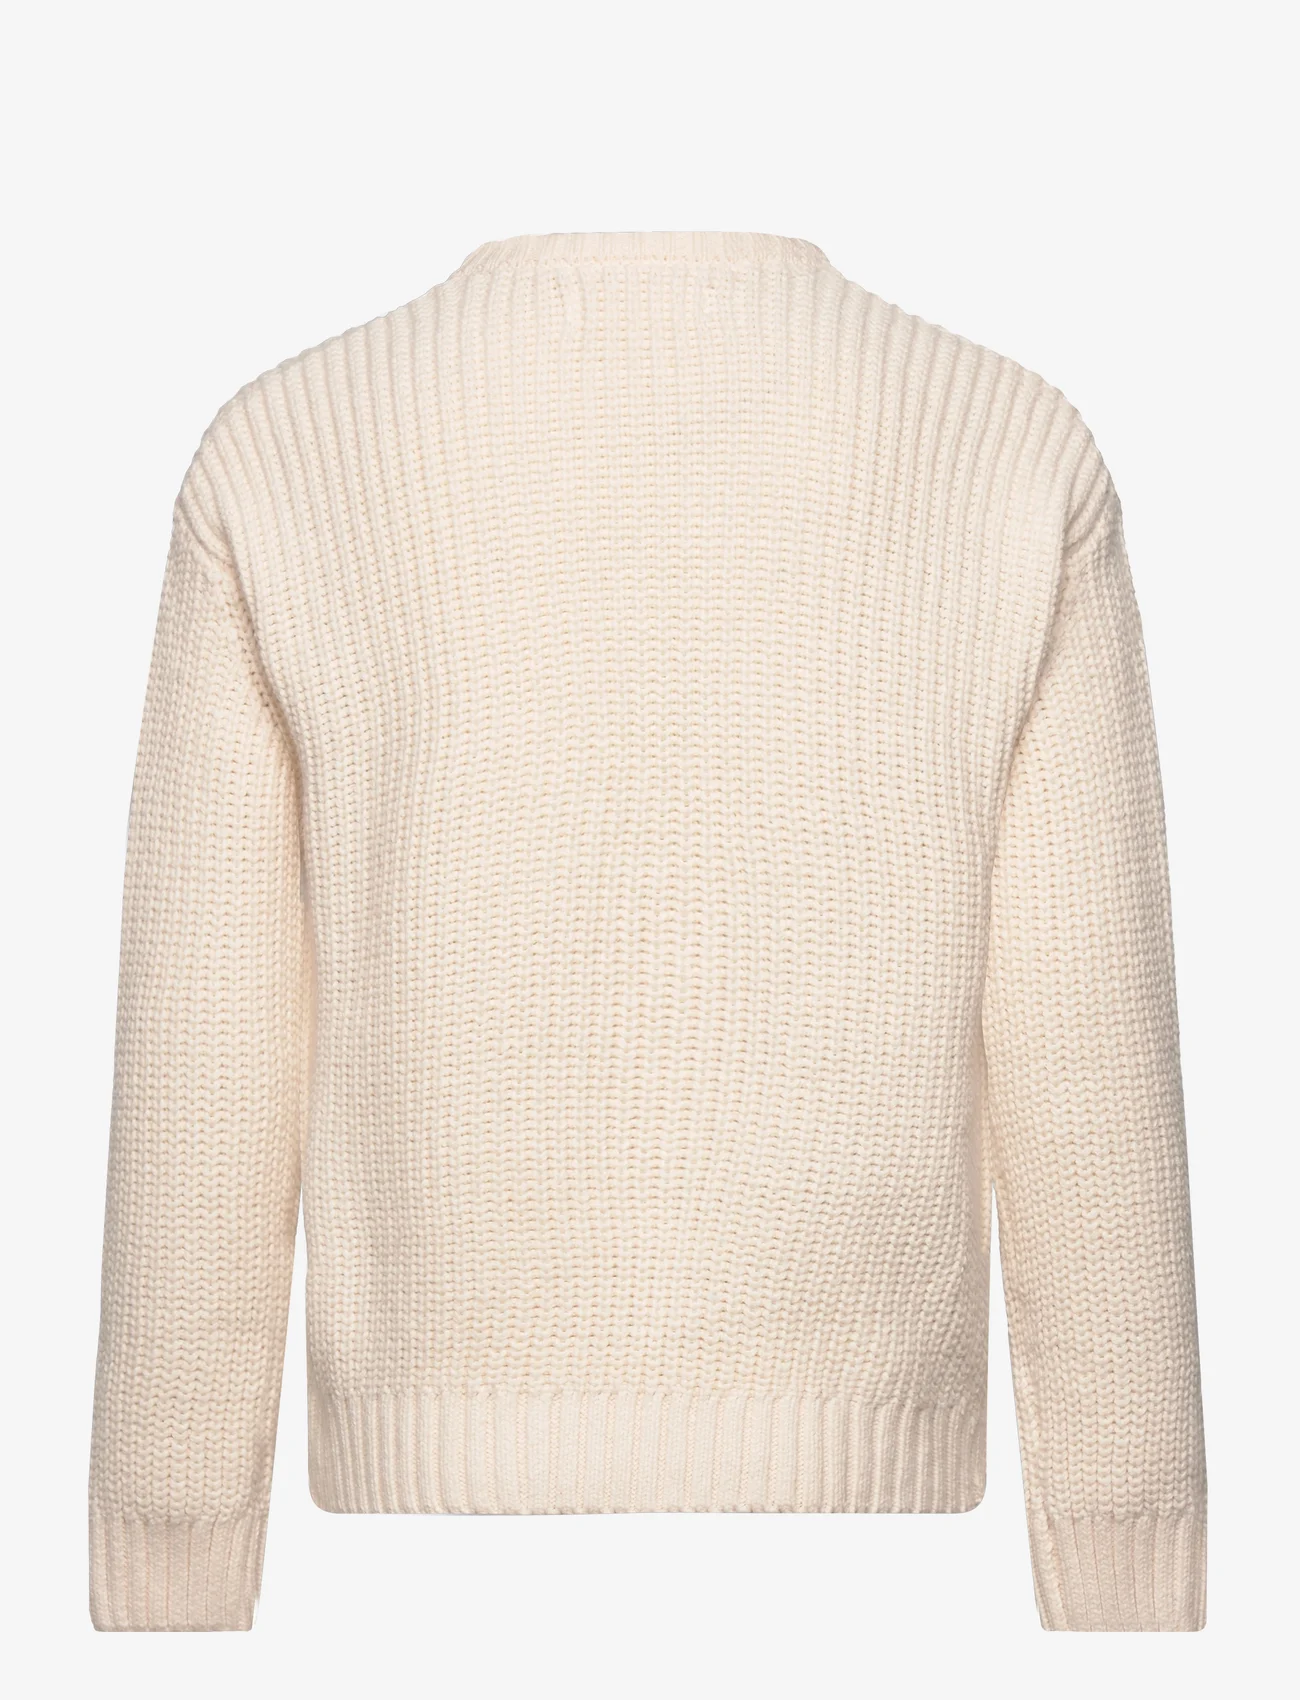 Mango - Floral embroidery sweater - tröjor - light beige - 1